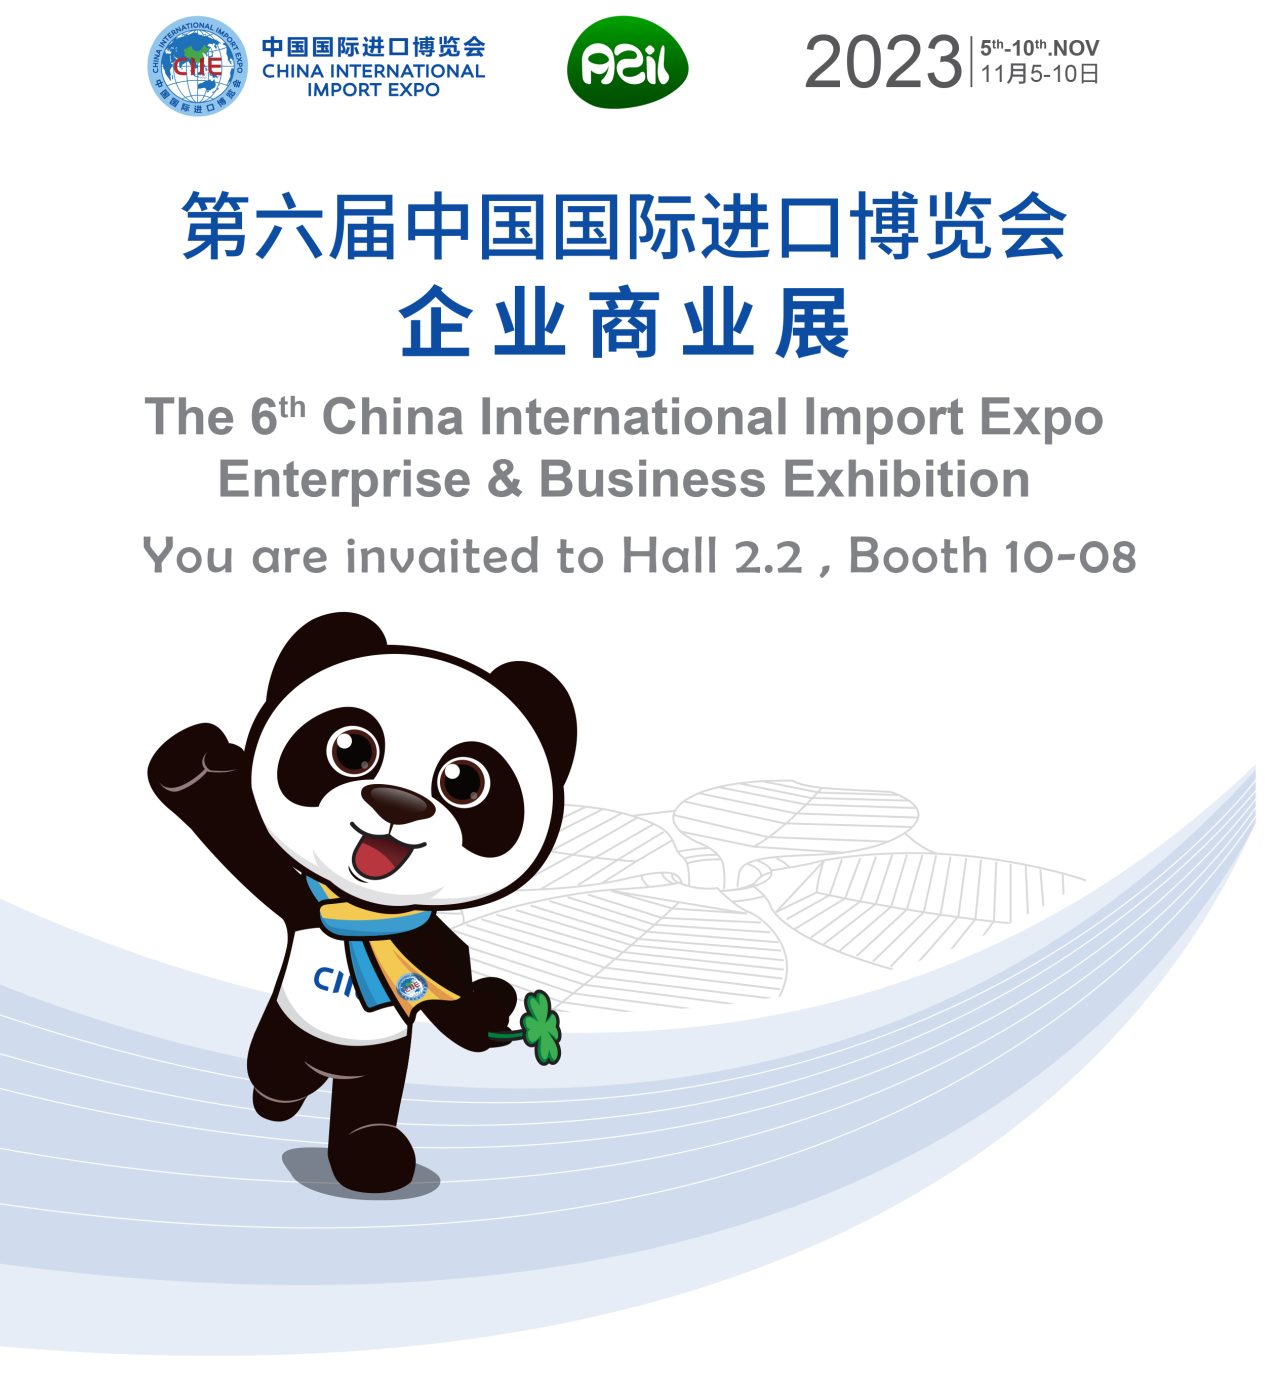 Artboard 1 1280x1399 - China International Import Export 2023